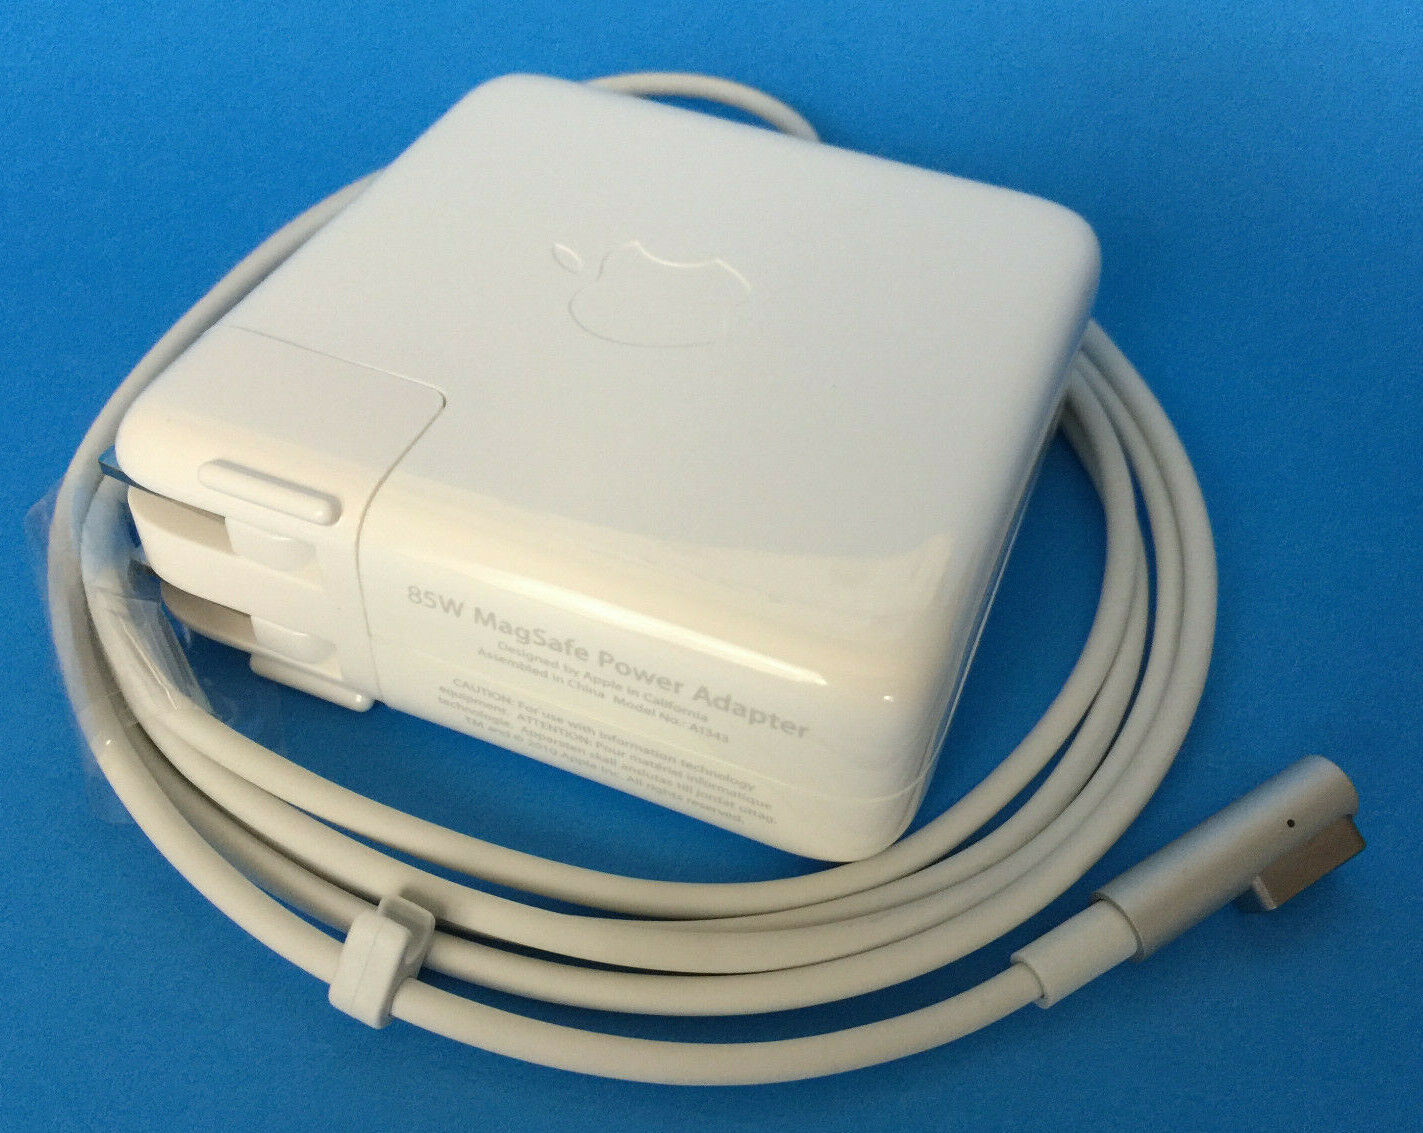 MacBook Pro 85W L-Tip MagSafe Power Adapter Charger 85 Watt MS1 Apple A1343 